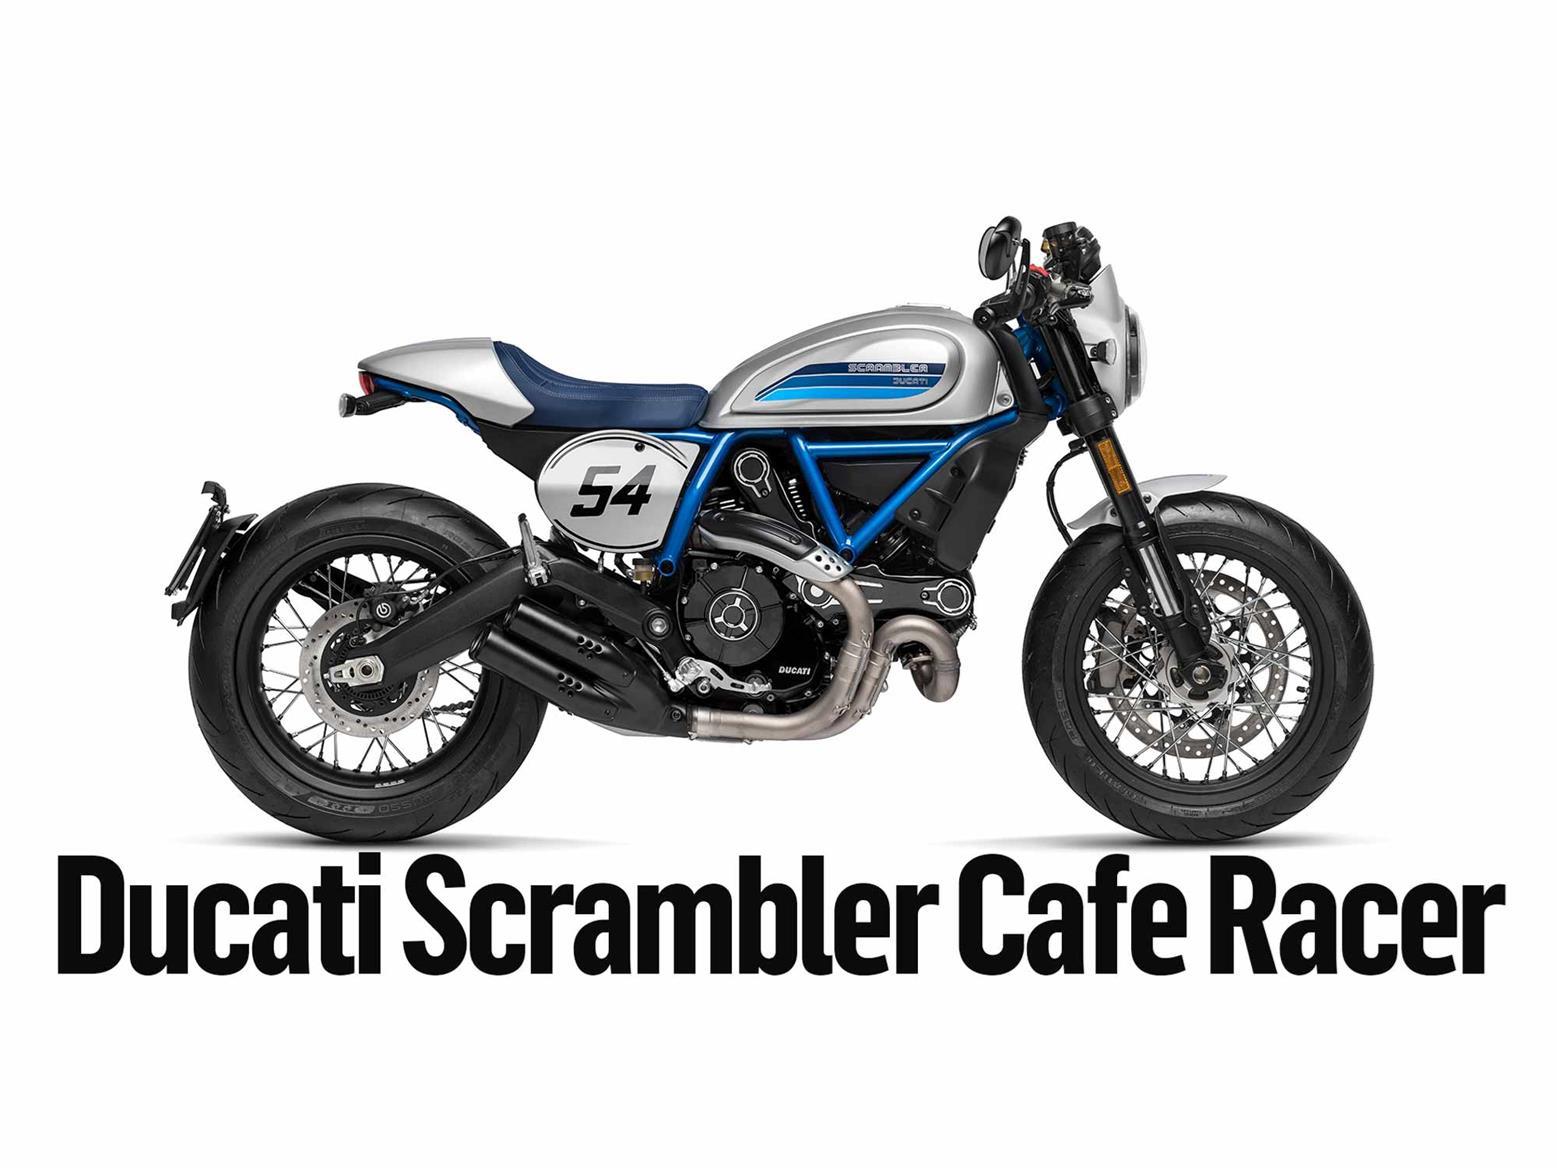 Read MCN's detailed Ducati Scrambler Café Racer long-term test here